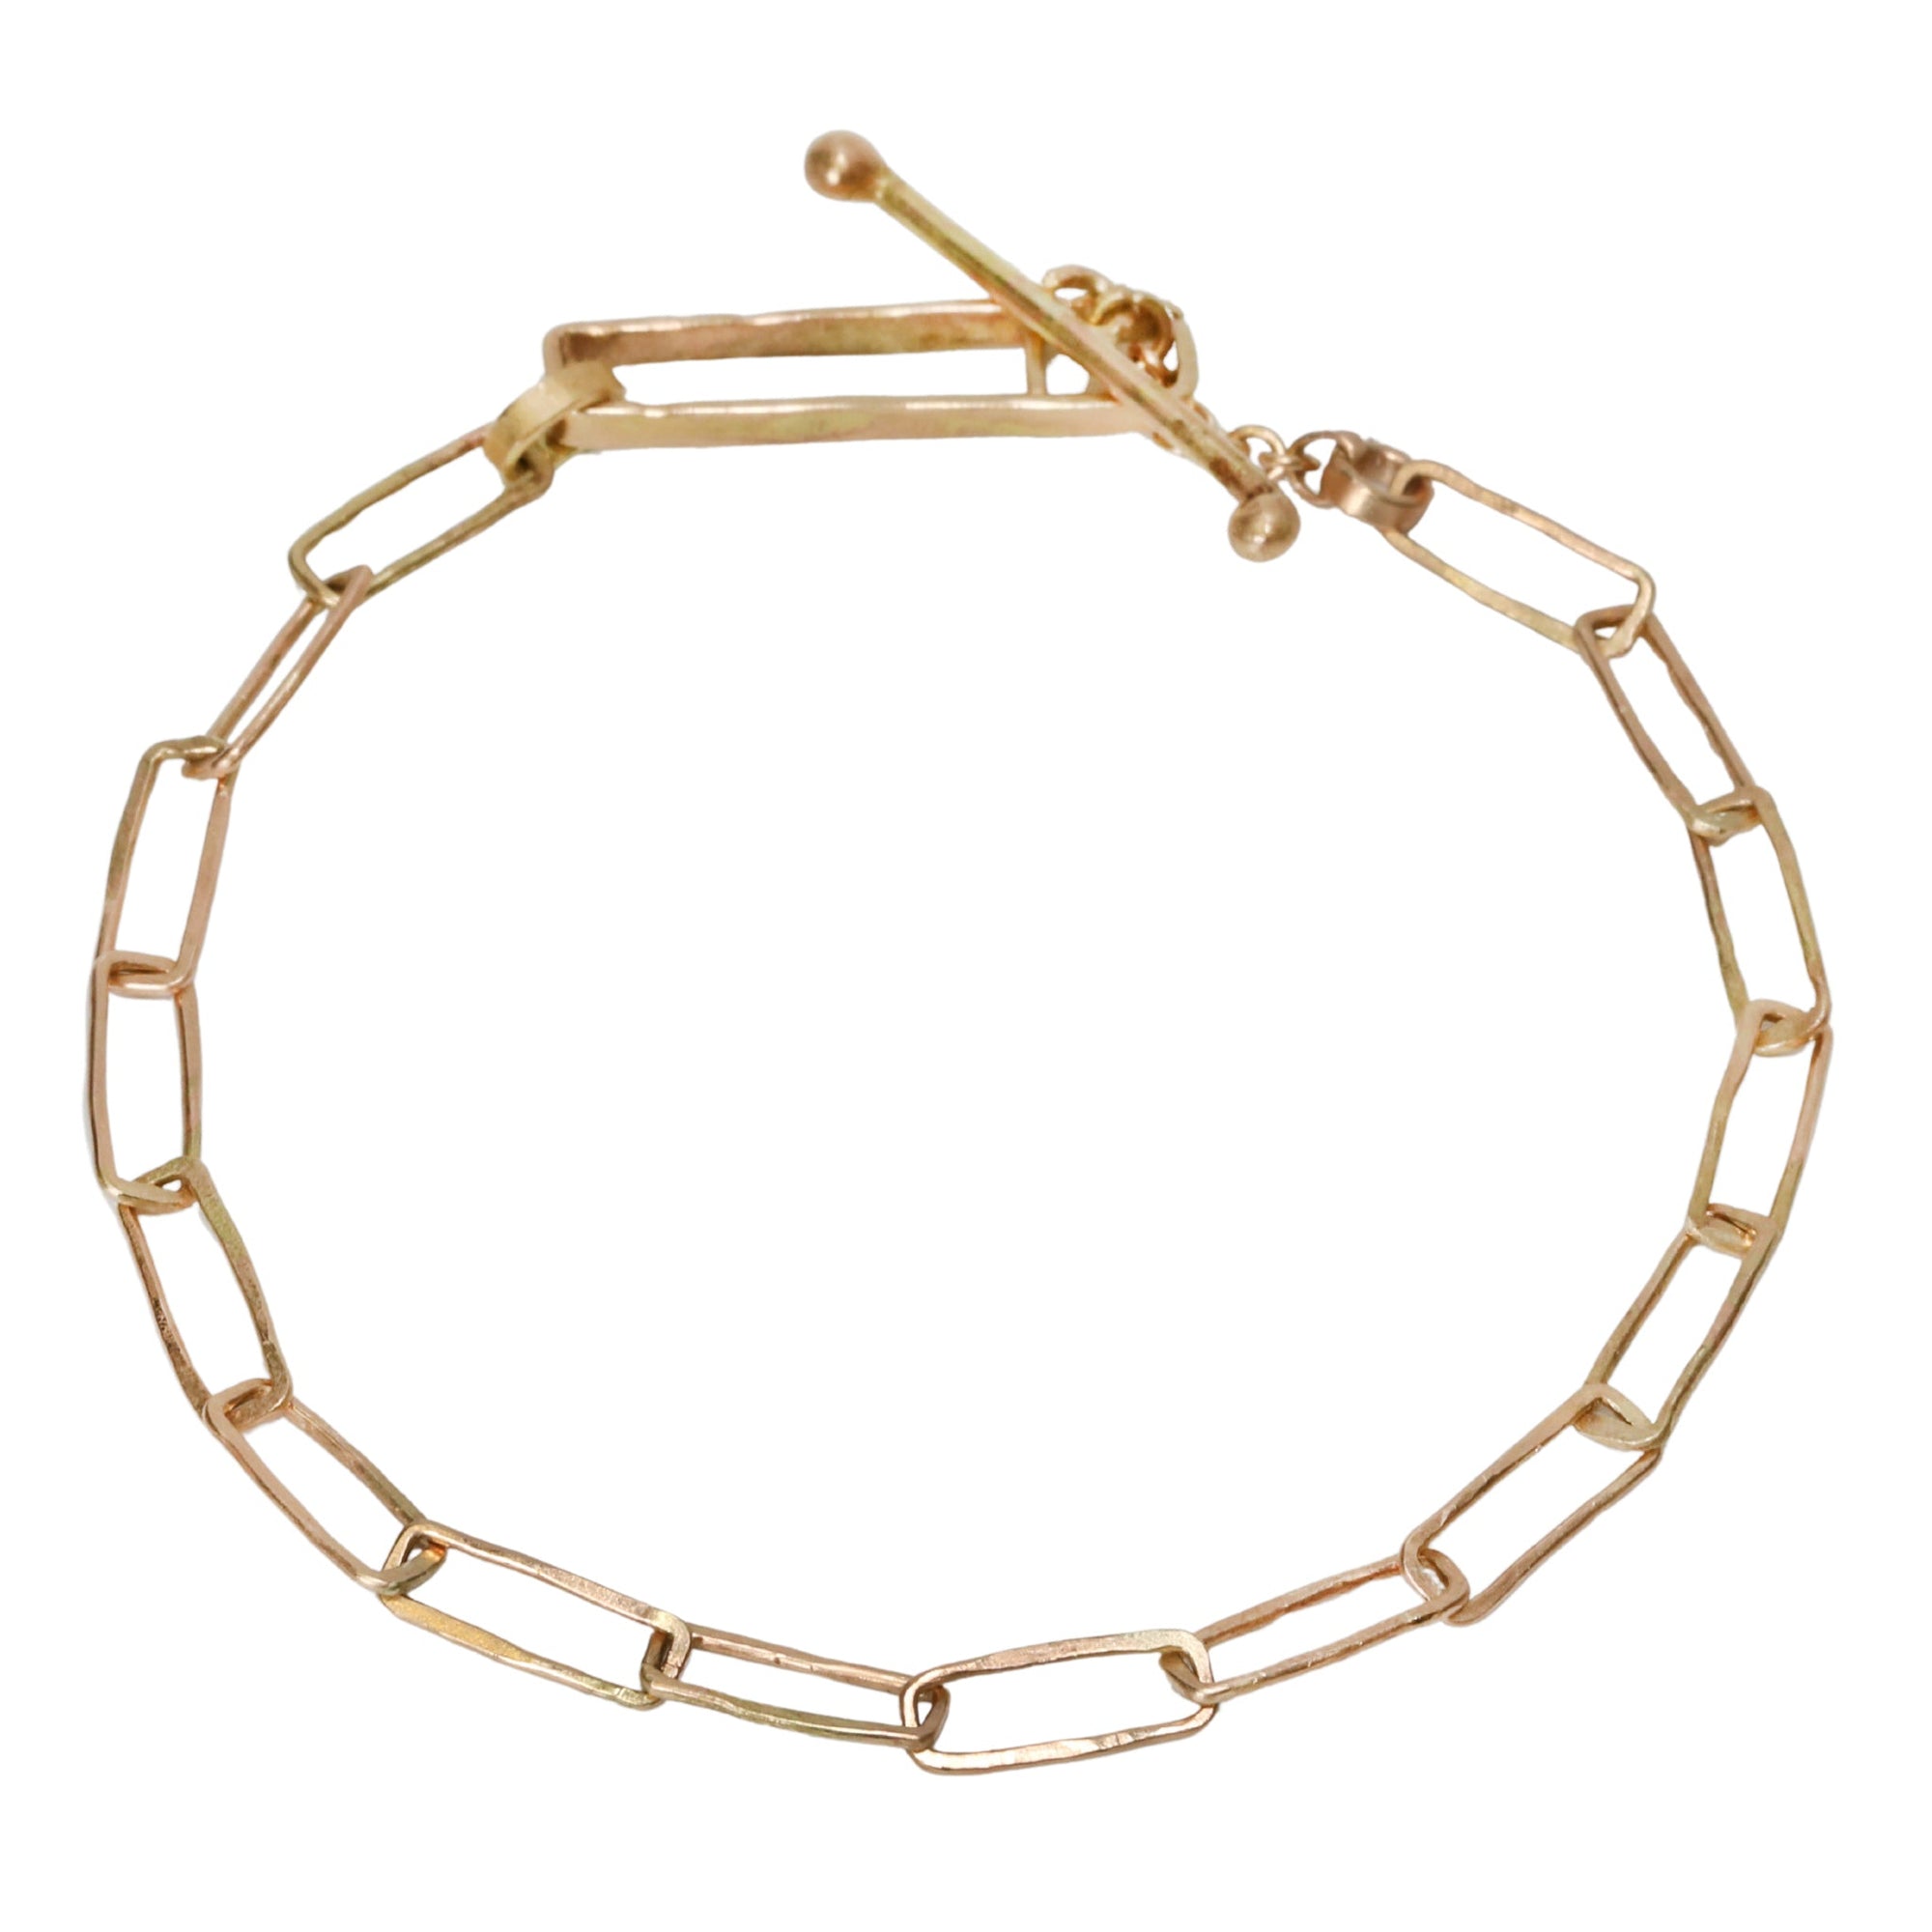 Gold &quot;Sweetie&quot; Bracelet Featuring Delicate Handmade Chain Links - Peridot Fine Jewelry - Sarah Macfadden